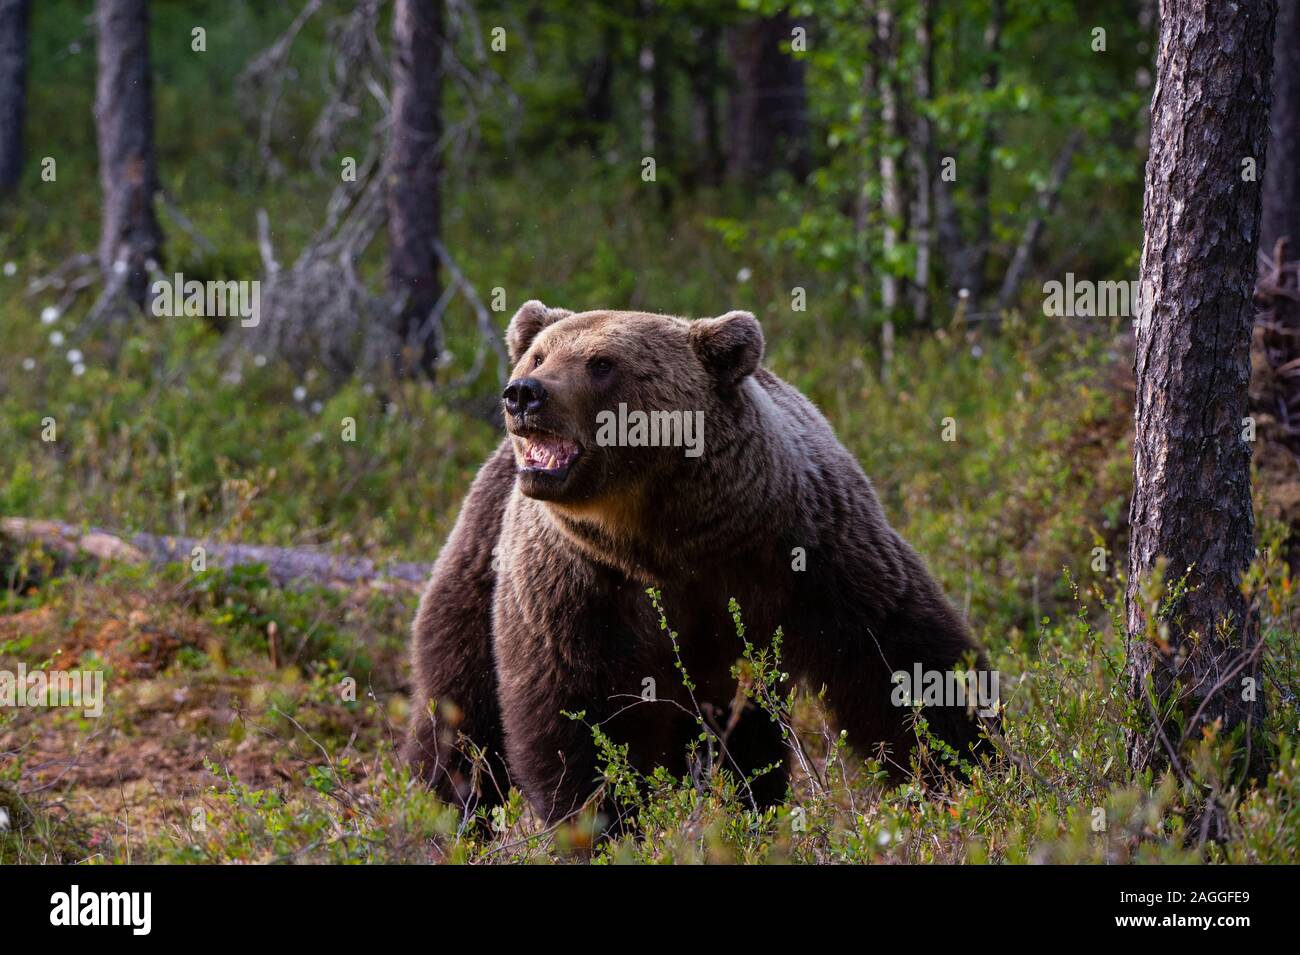 European brown bear (Ursus arctos) walking in forest, Kuhmo, Finland Stock Photo